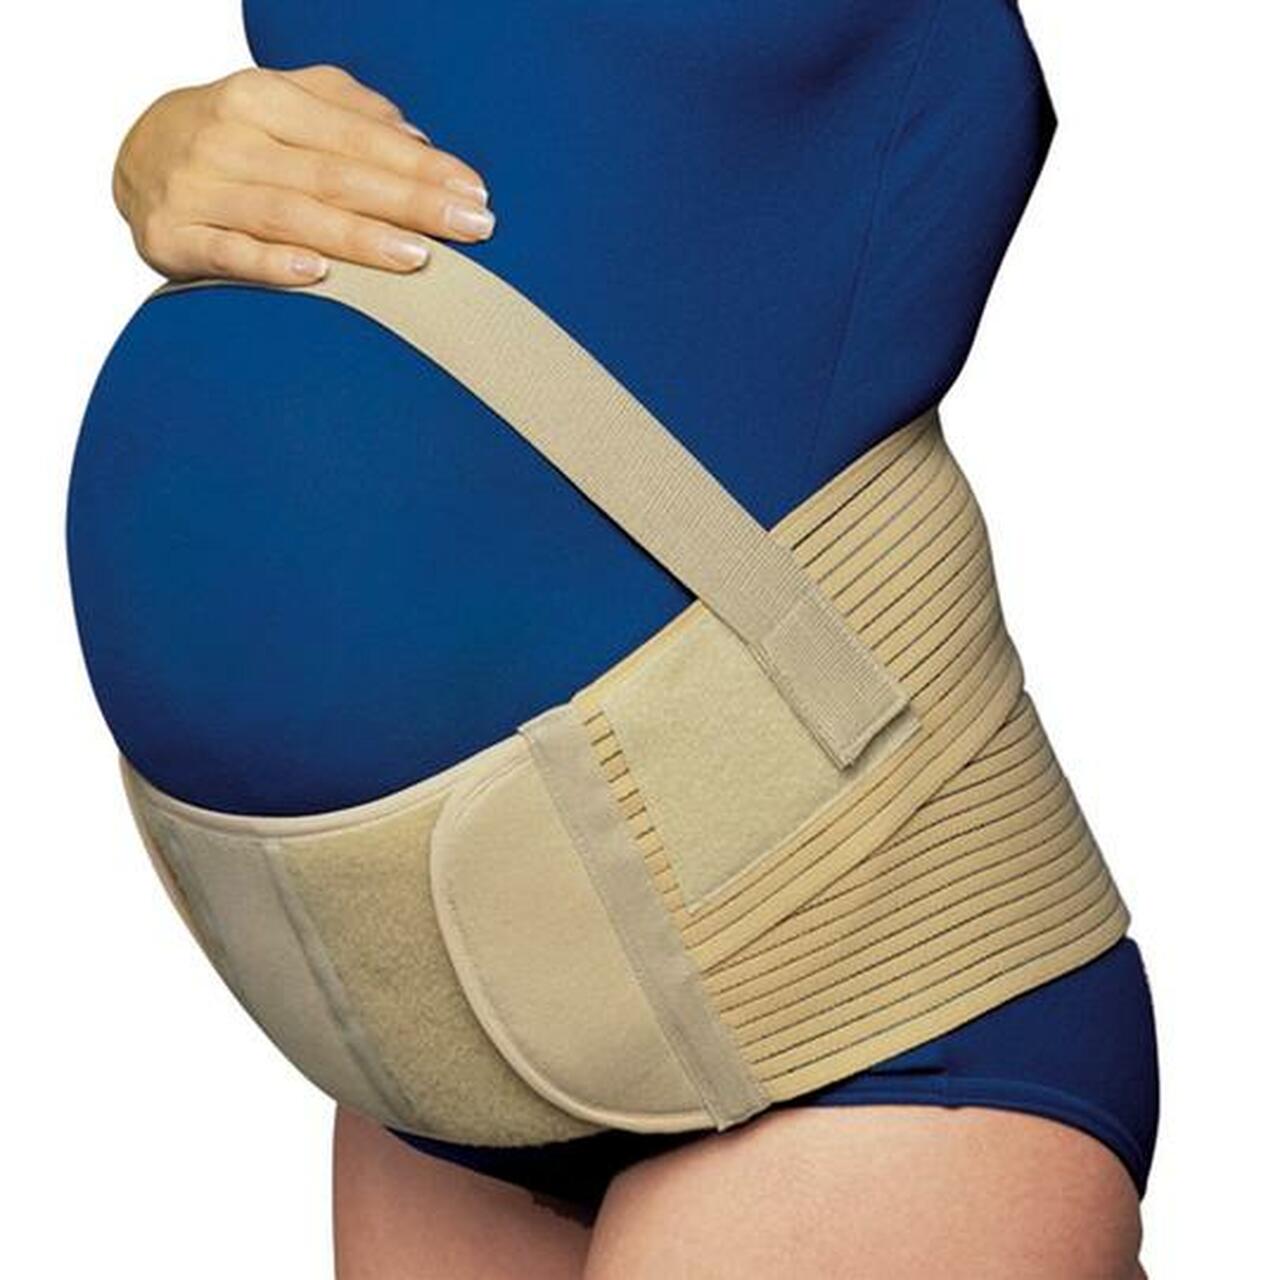 Otc Medium Maternity Support Beige Large (16-20) Previouse Dress Size - Ea/1